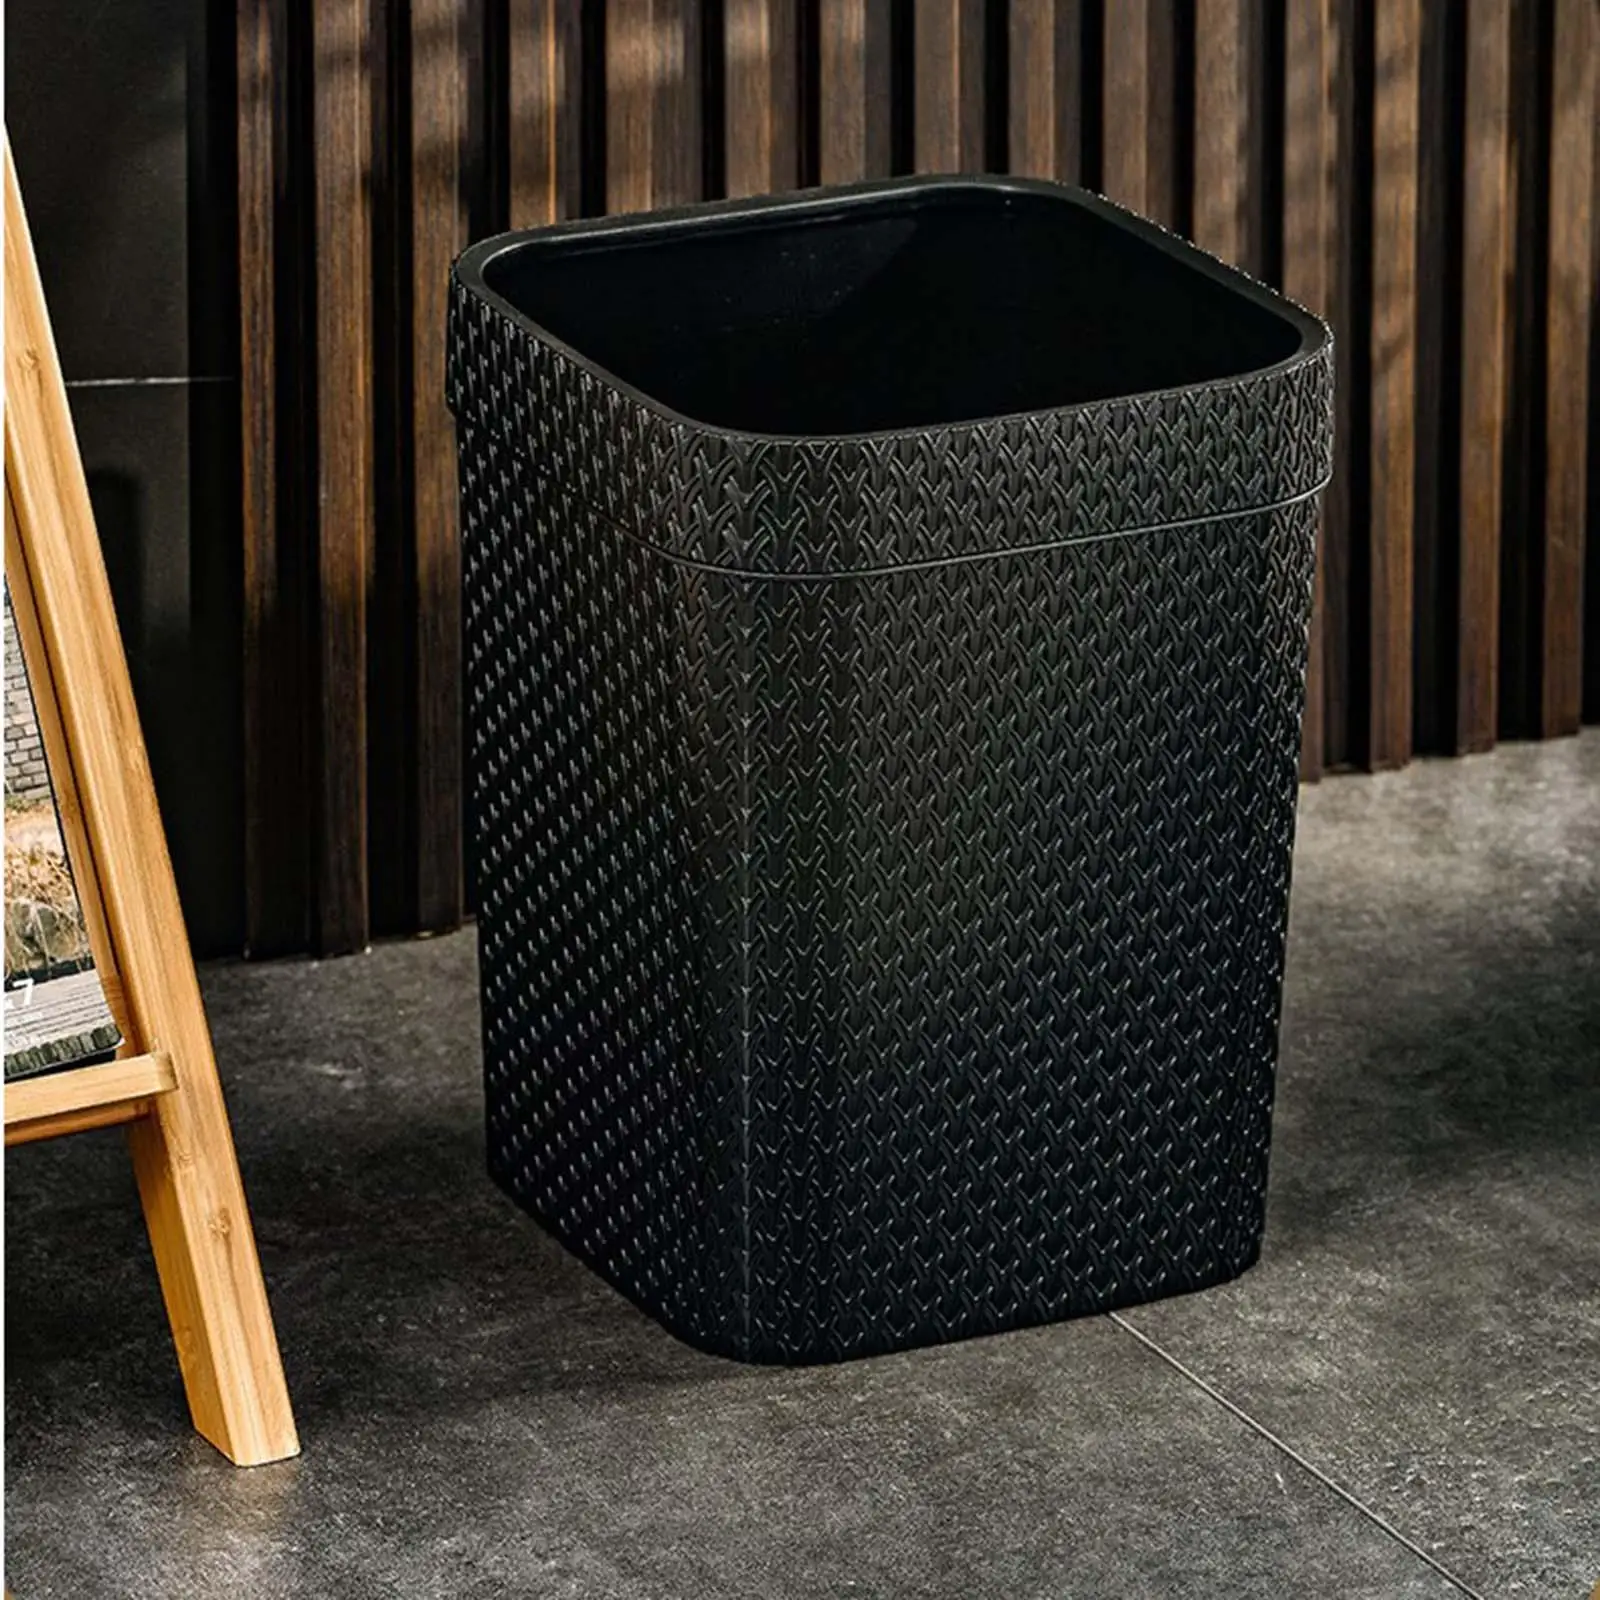 Garbage Bin Plastic Square Narrow Rattan Style Wastebasket Dustbin Waste Bin for Hotel Office Cars Patio Outdoor Indoor